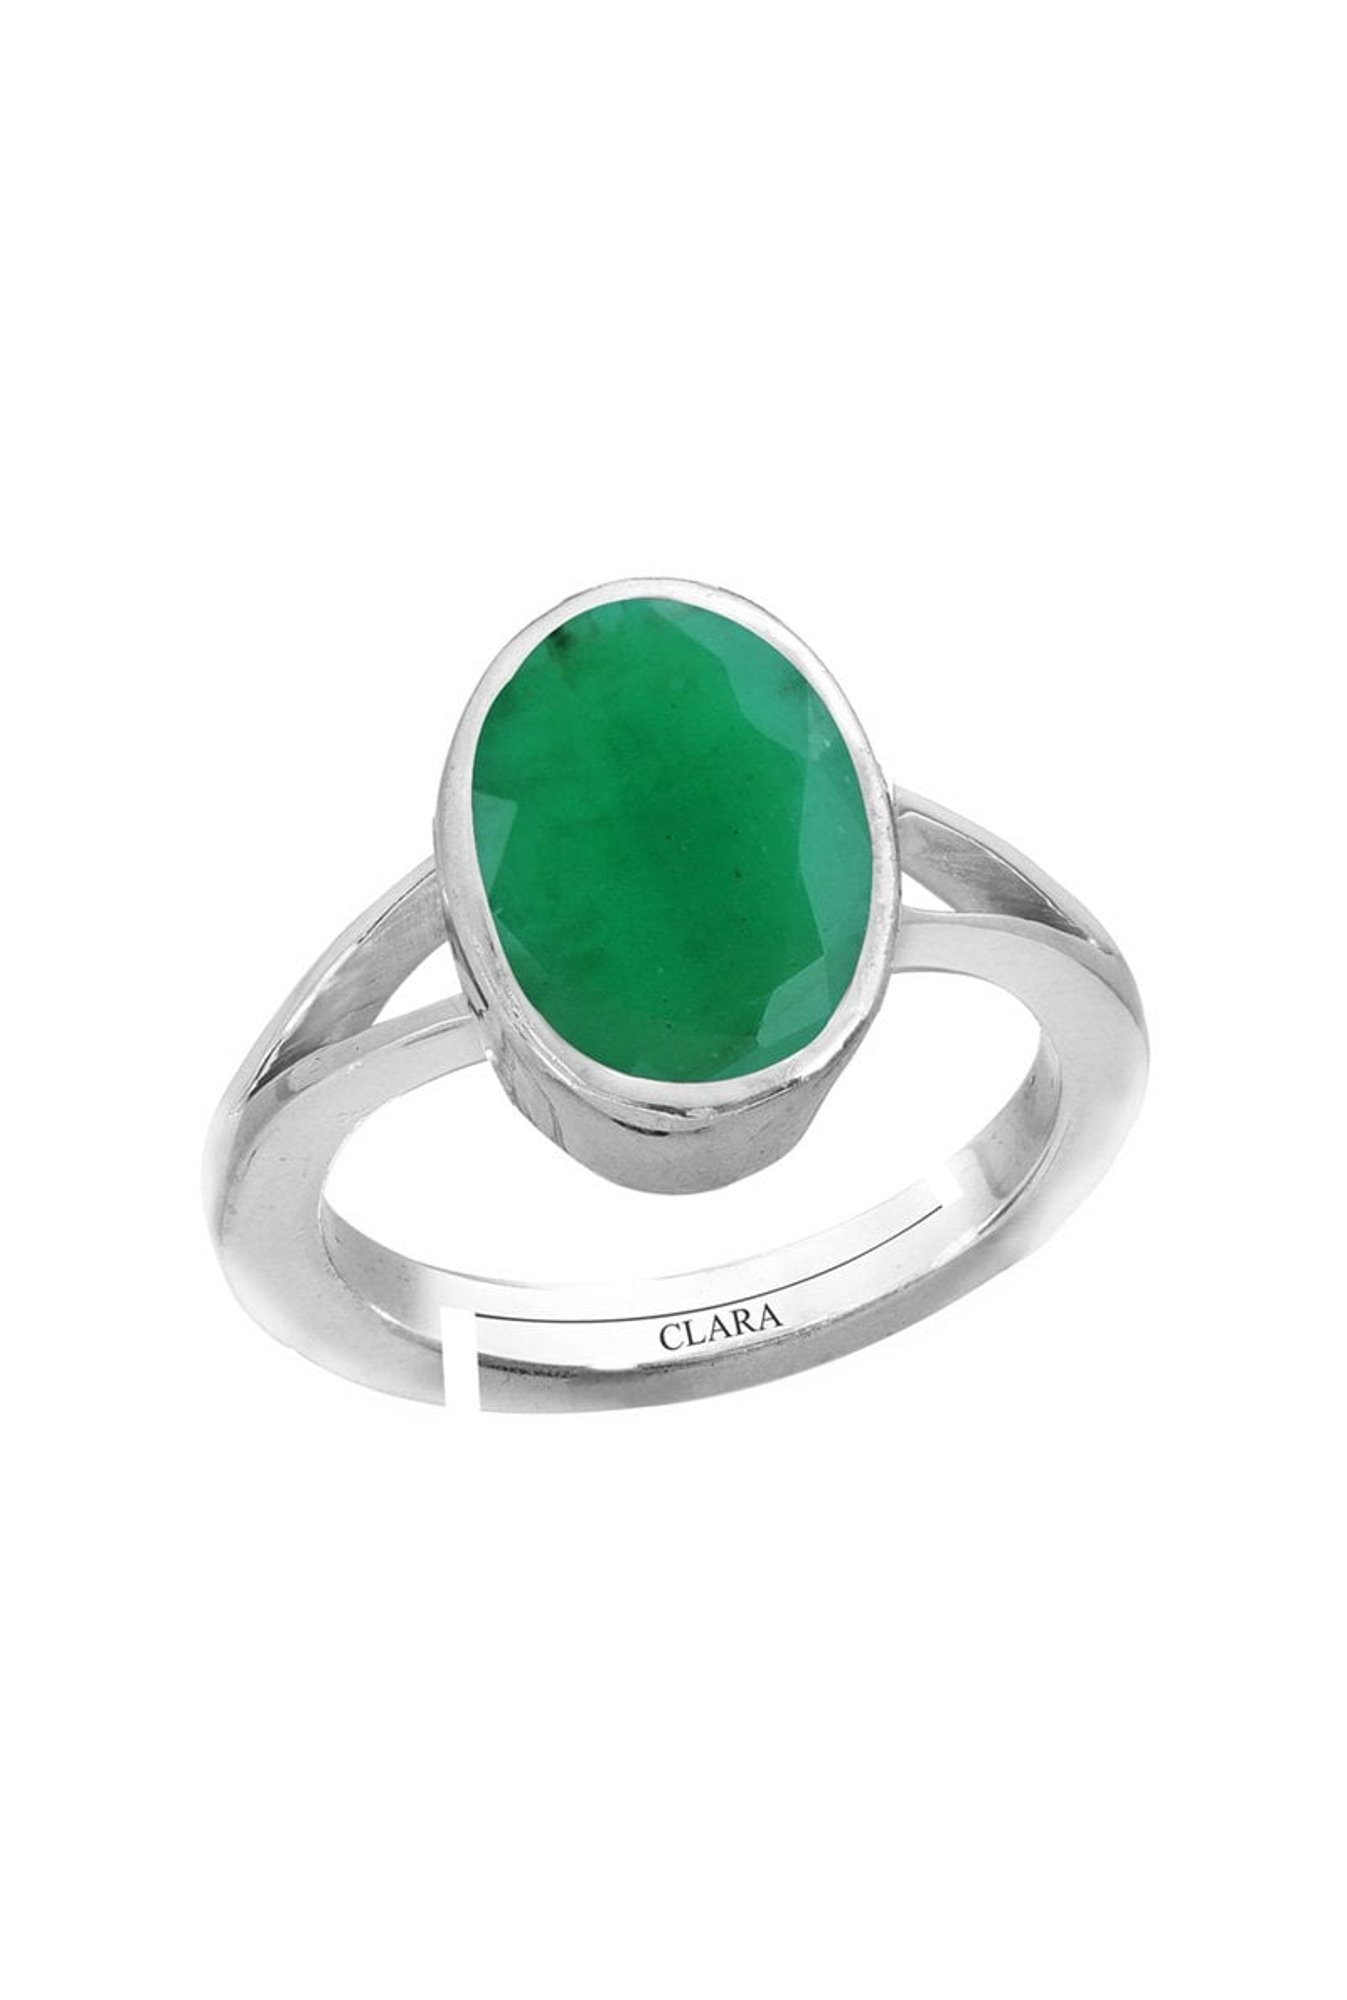 Oval Emerald Ring, Natural Panna Gemstone Ring - Shraddha Shree Gems